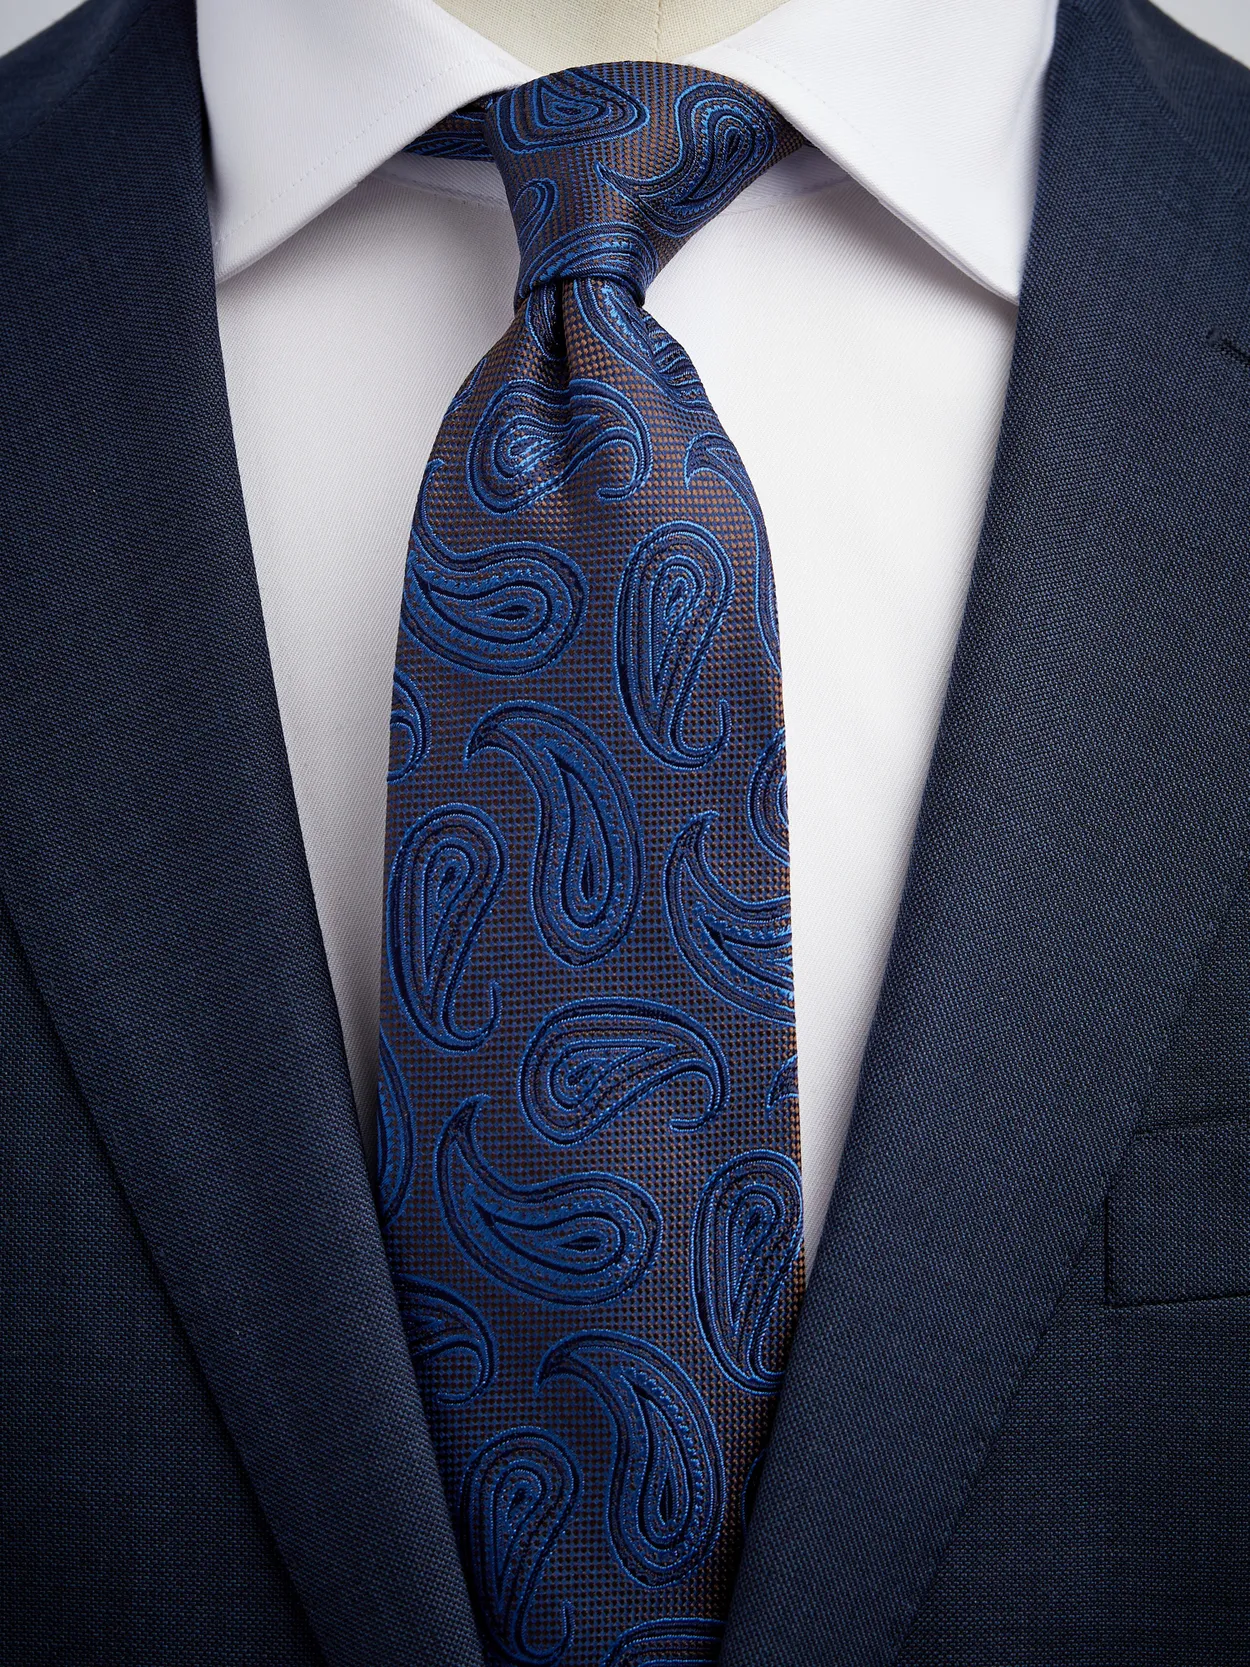 Blue & Beige Tie Paisley